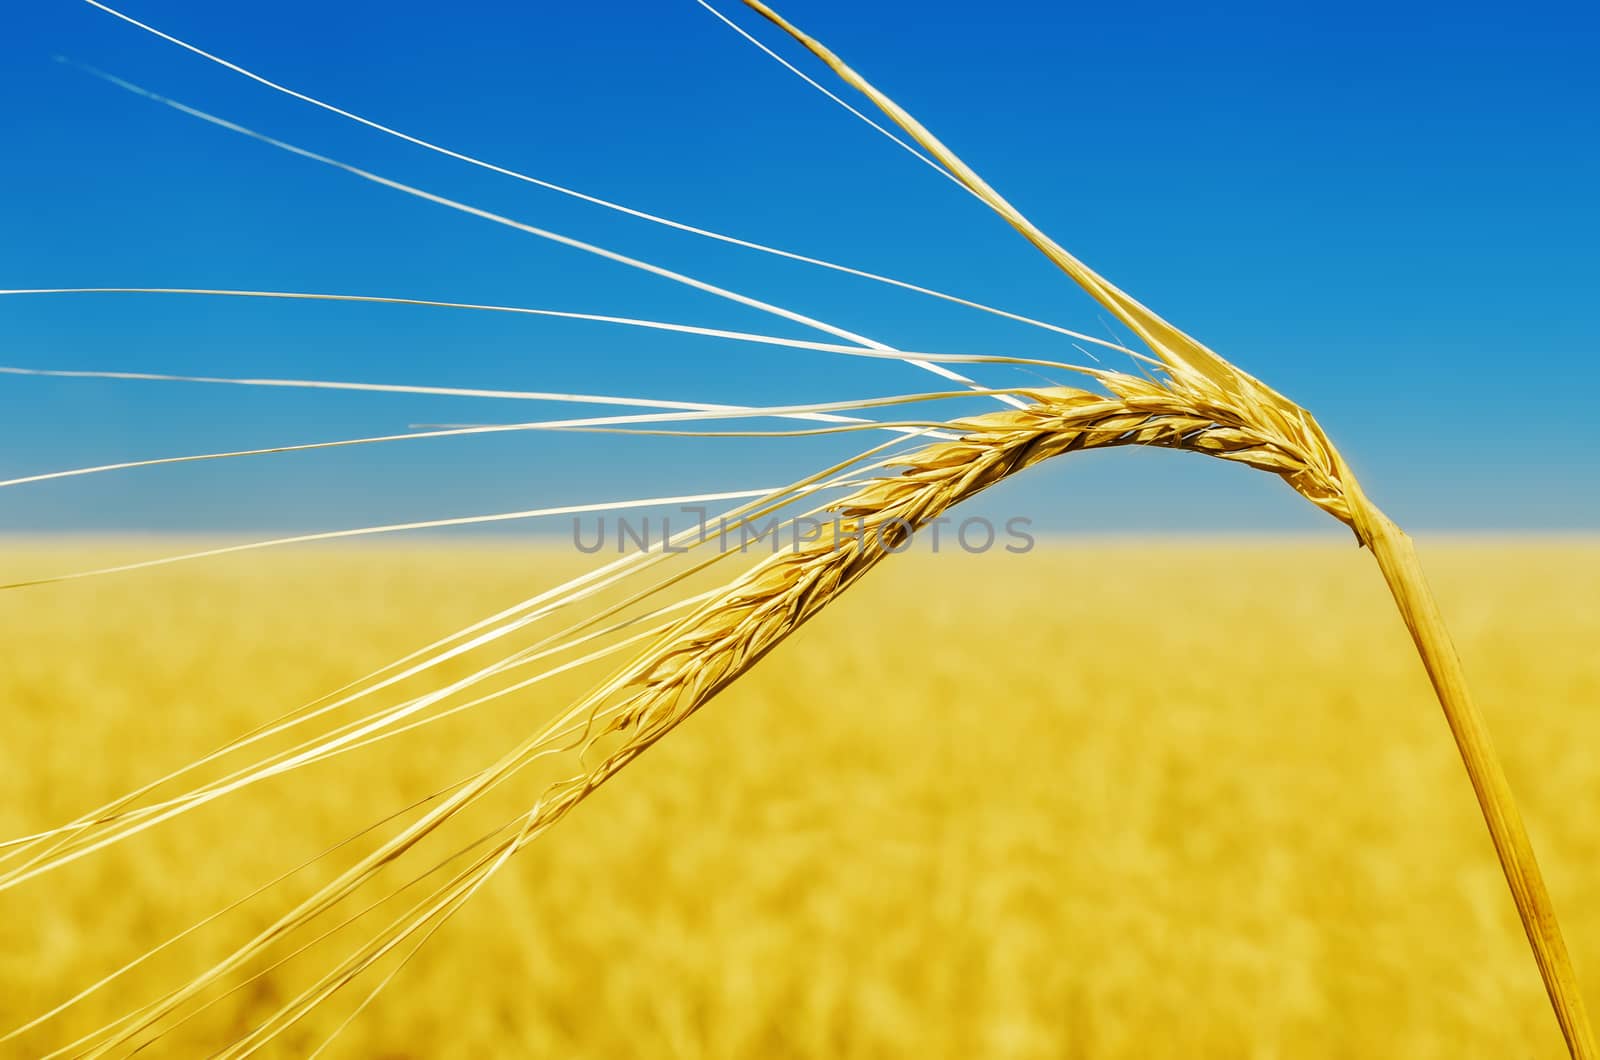 wheat ear close up and yellow field with blue sky like ukrainian flag